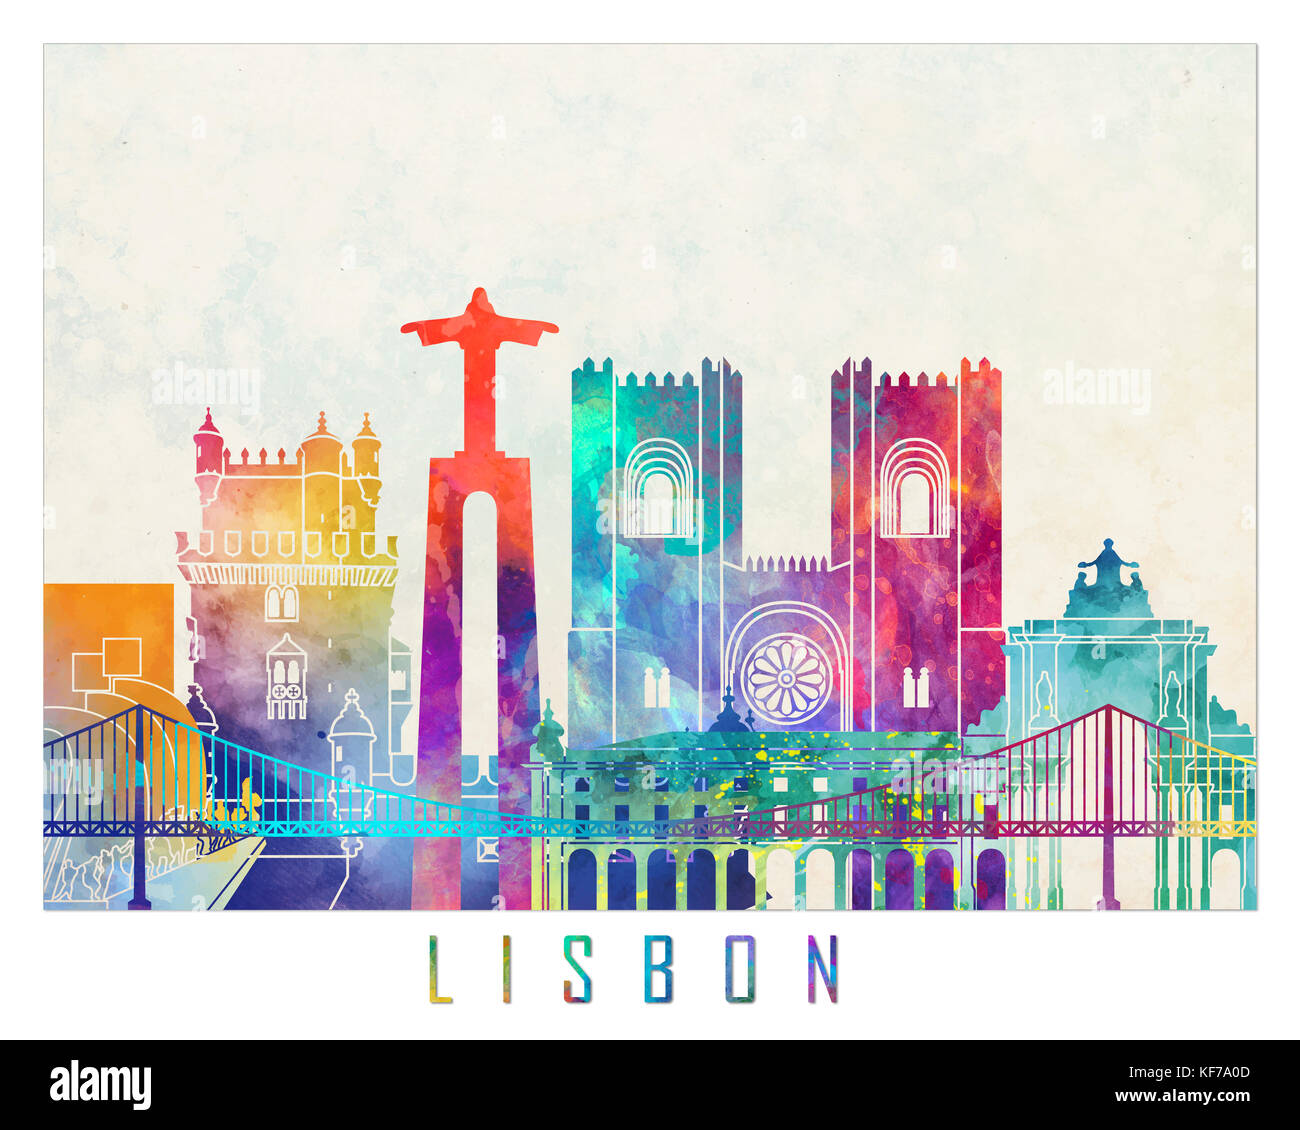 Lisbon landmarks watercolor poster Stock Photo